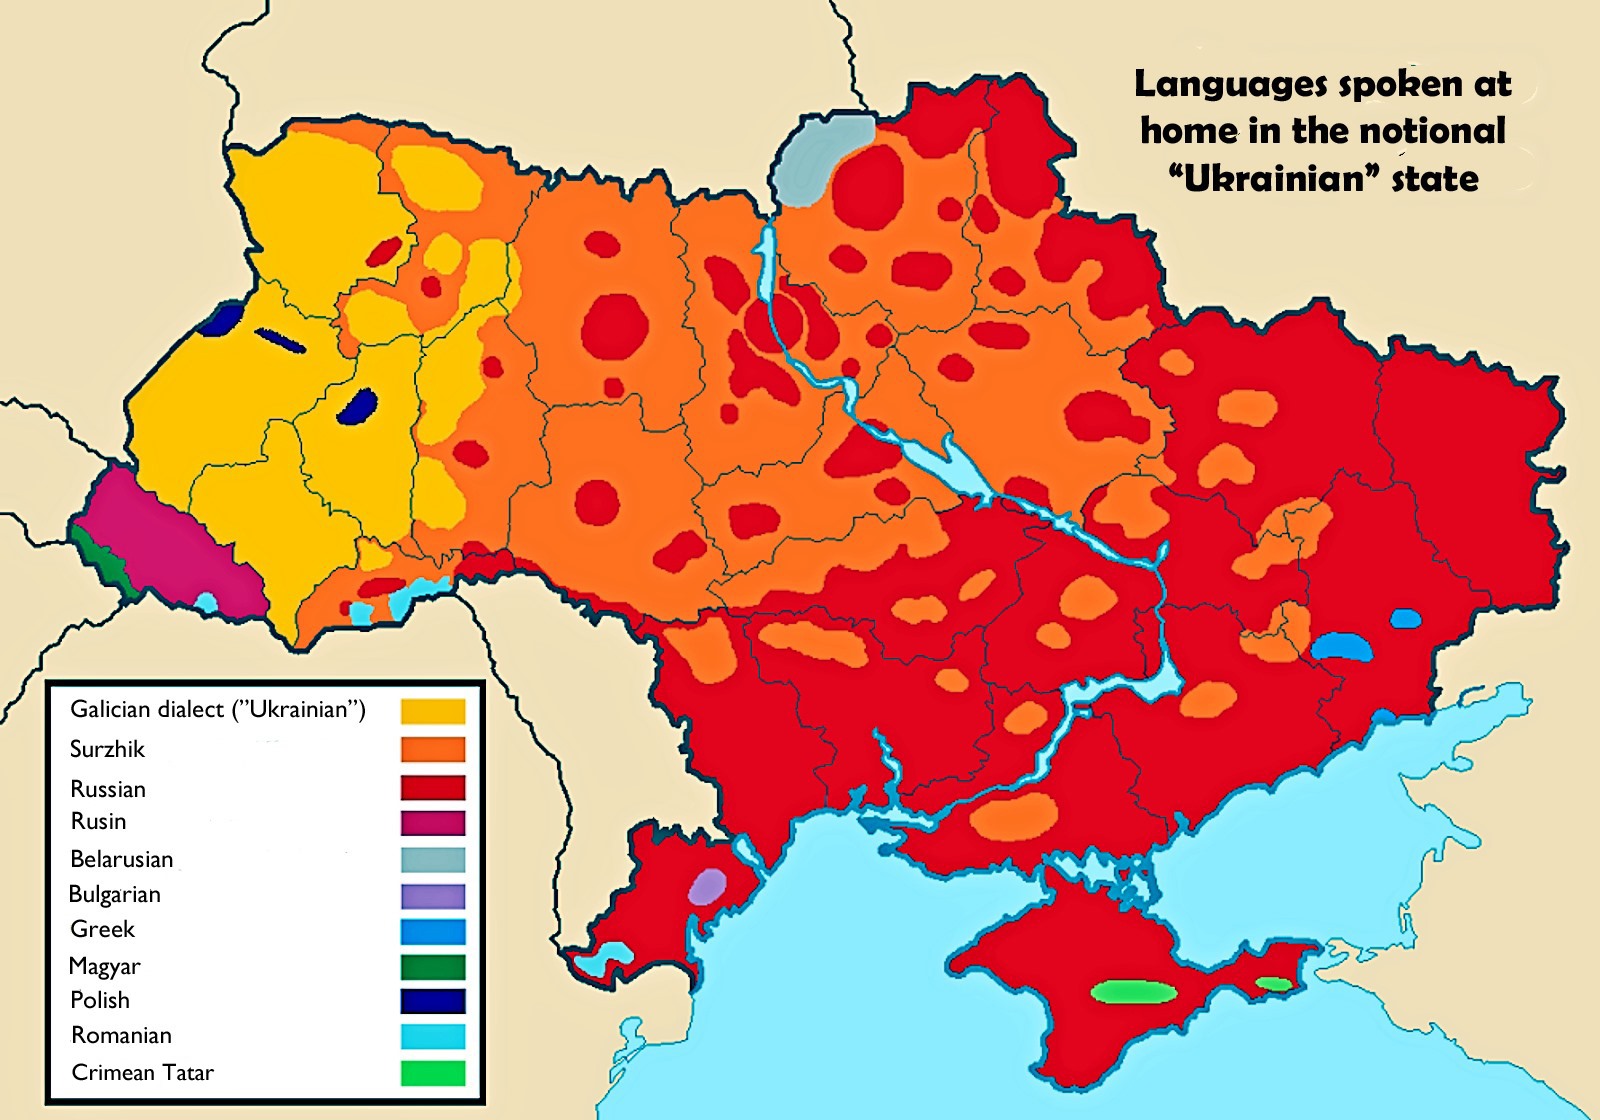 00 languages spoken at home. Ukraine. 21.02.15